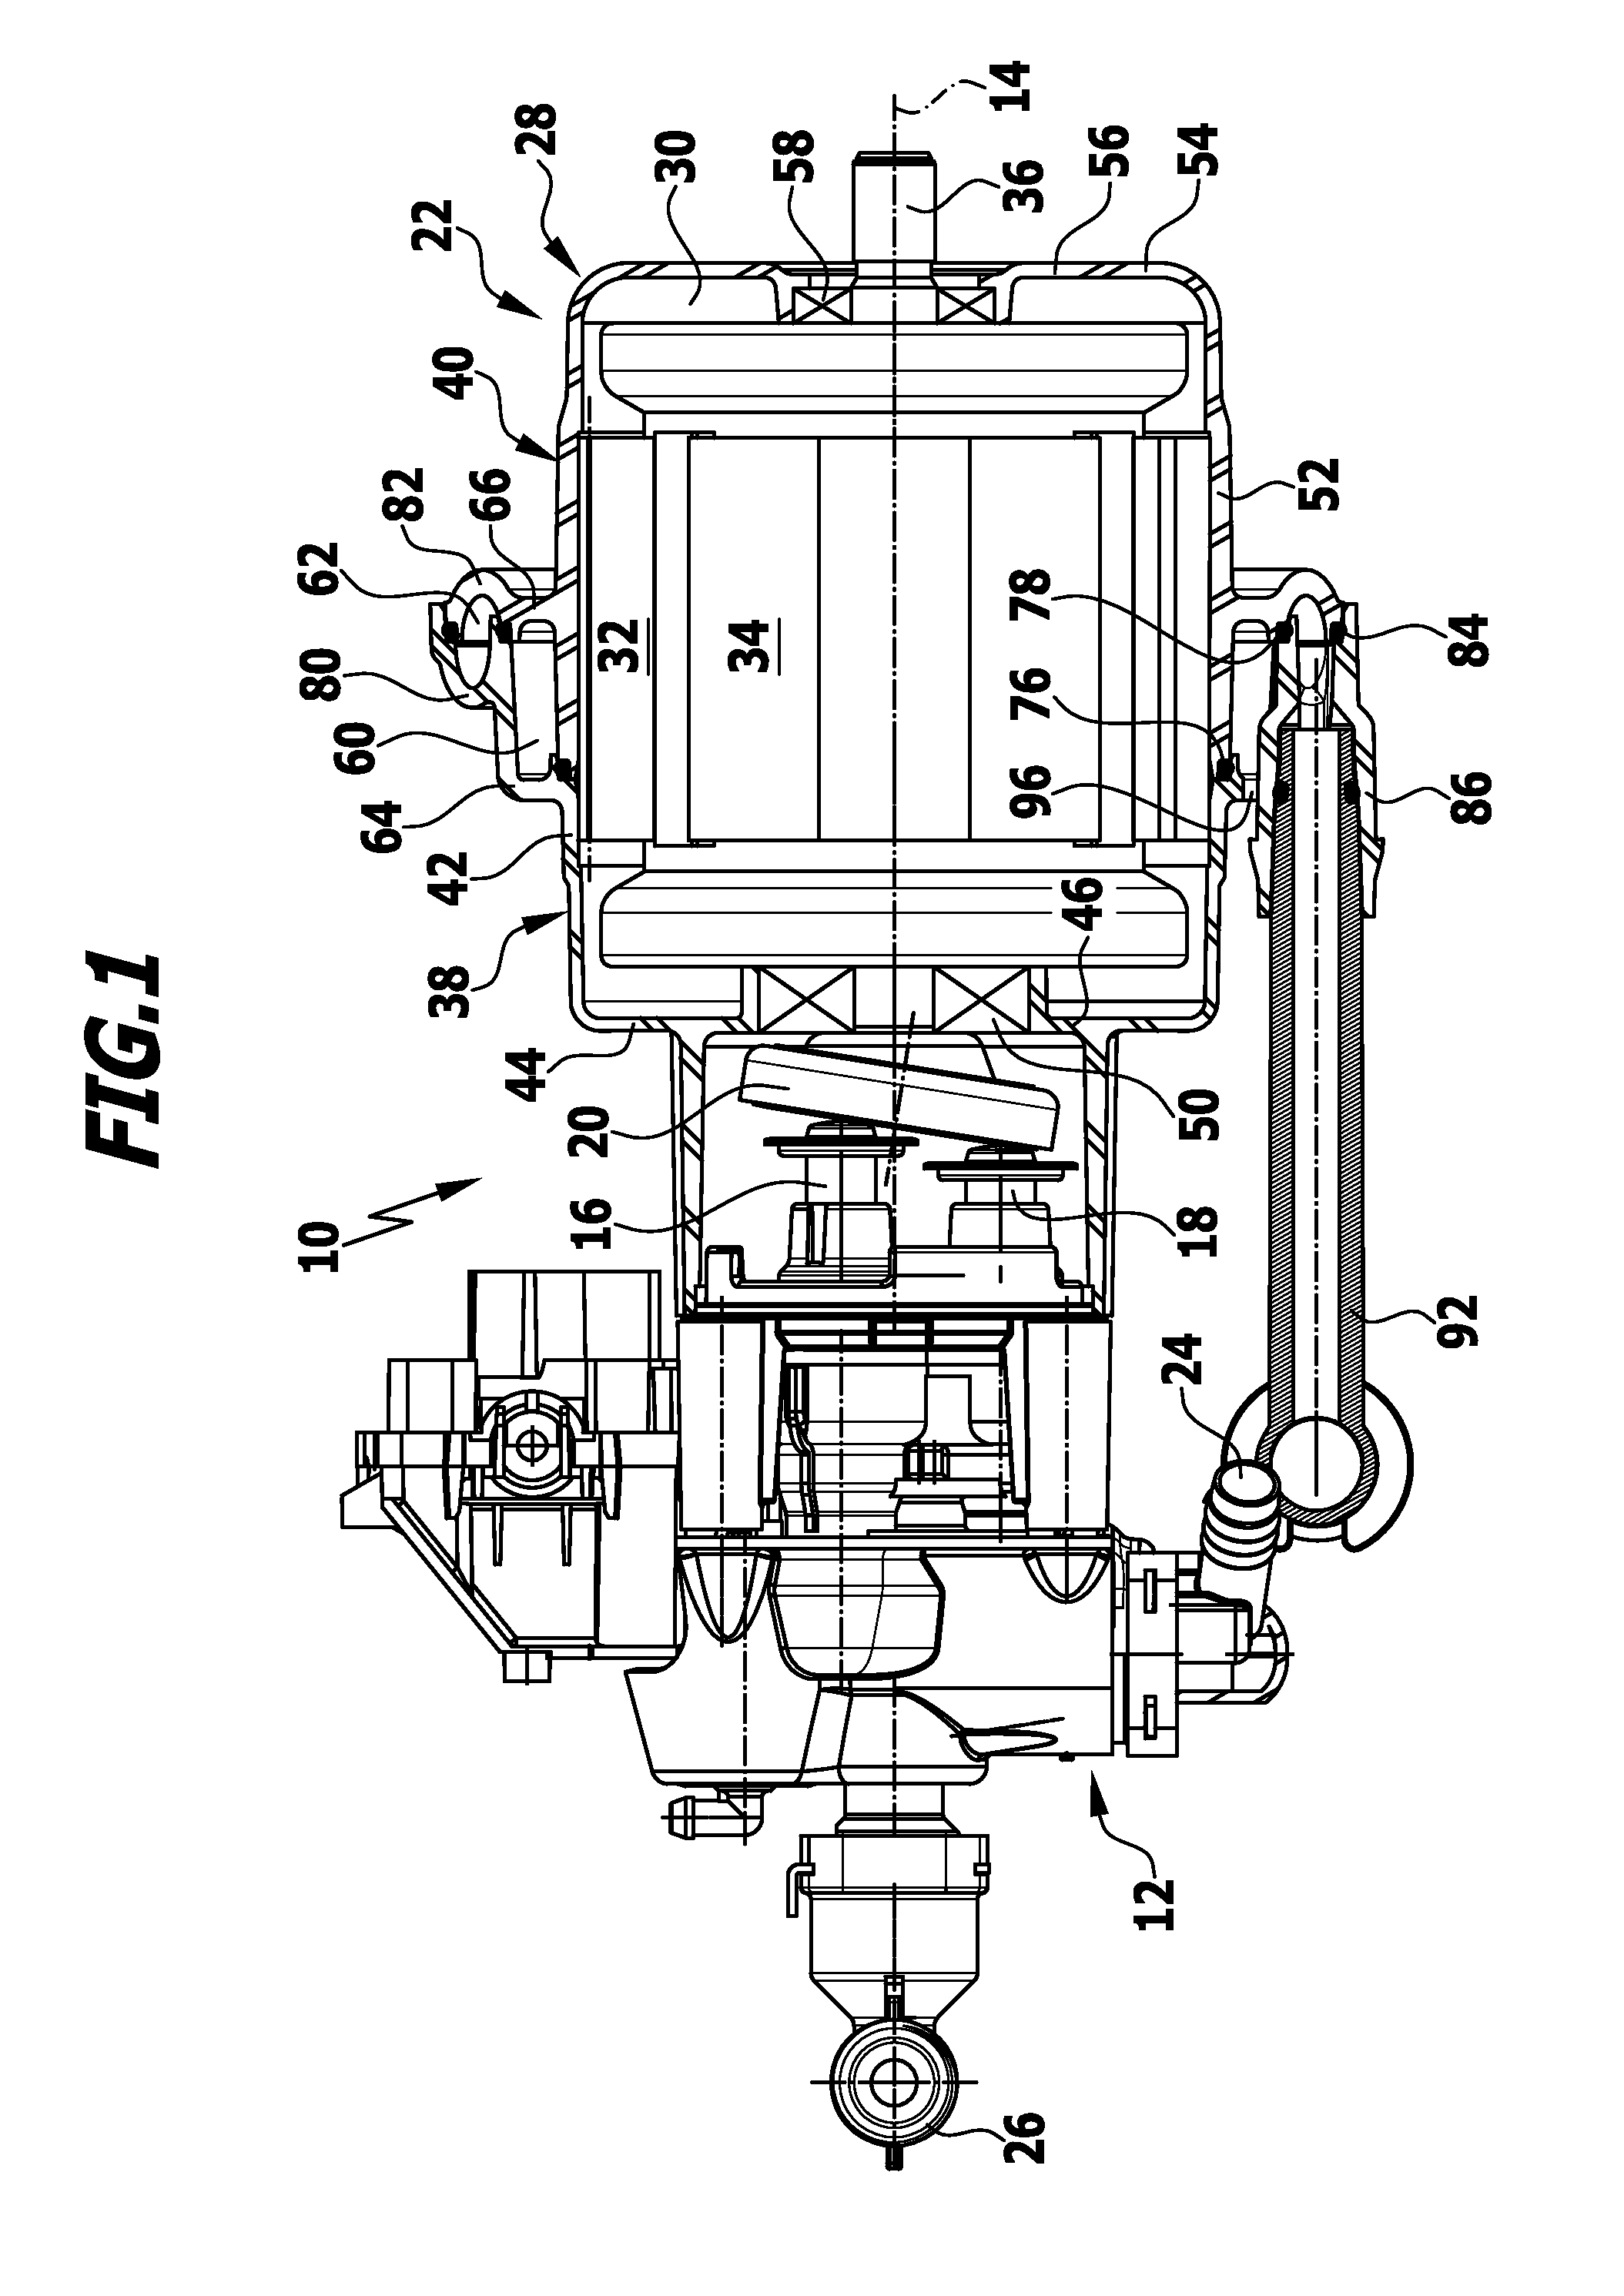 Motor-pump unit